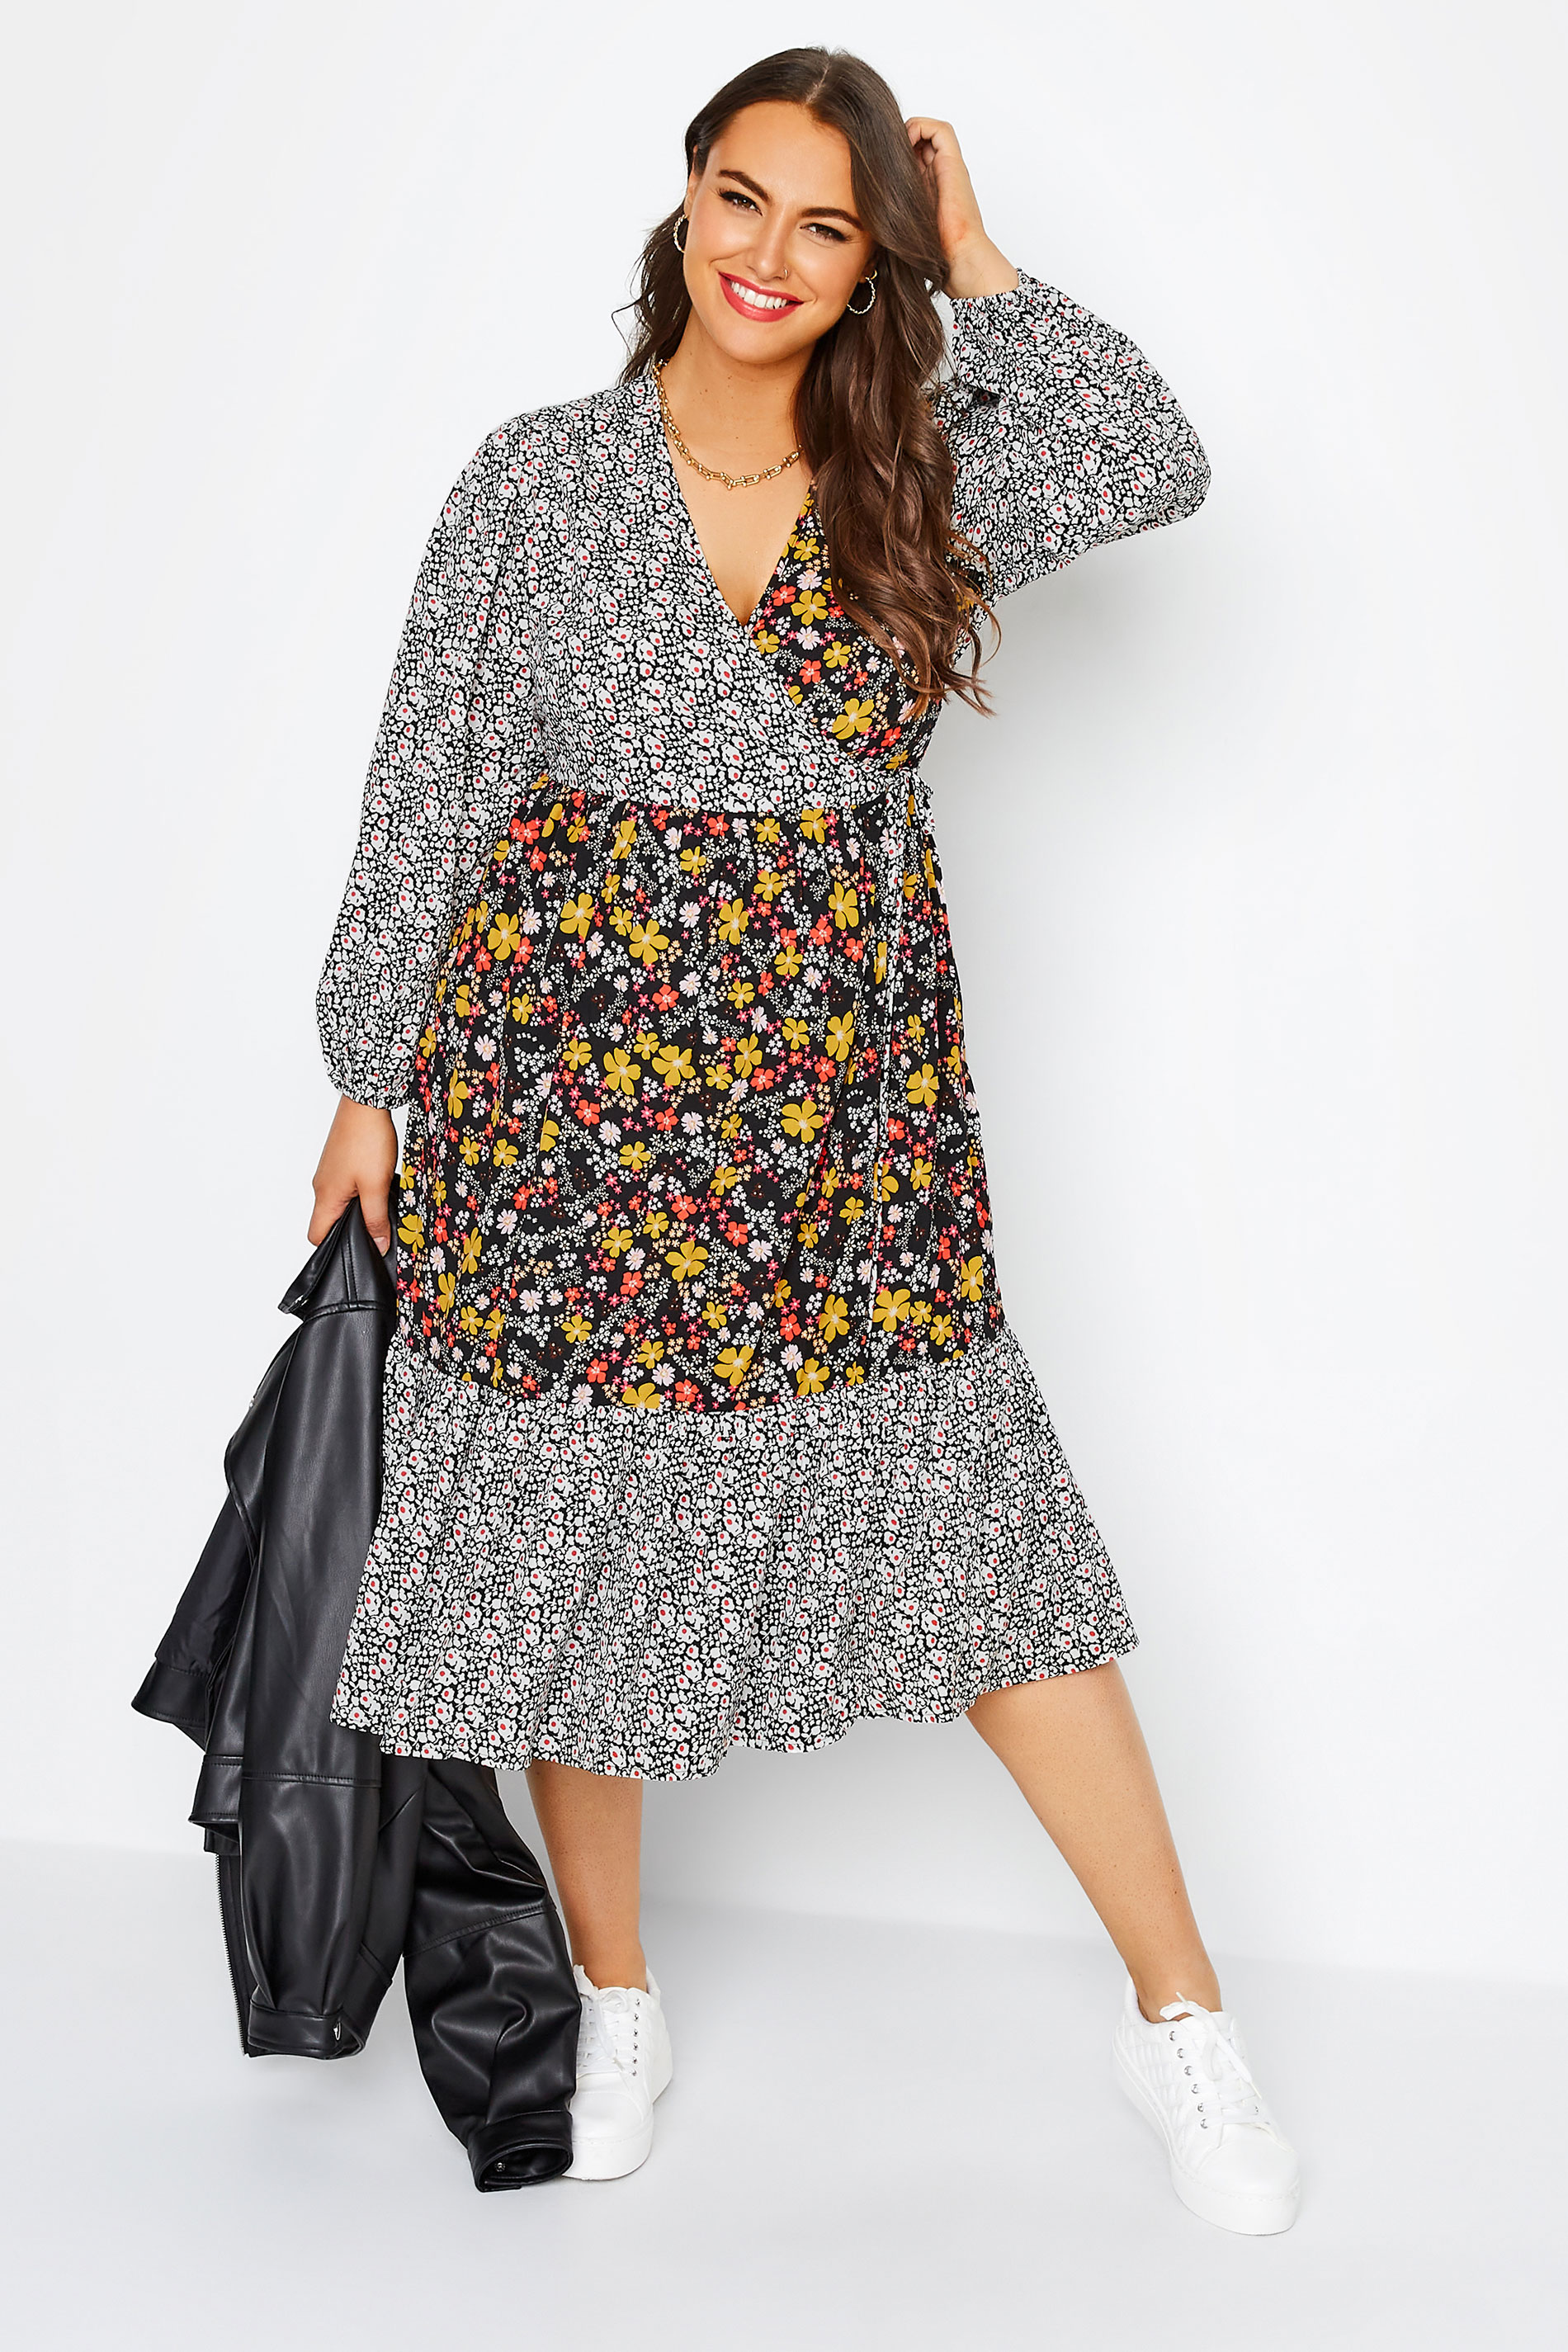 LIMITED COLLECTION Plus Size Black Contrast Dalmatian Floral Wrap Dress | Yours Clothing 2